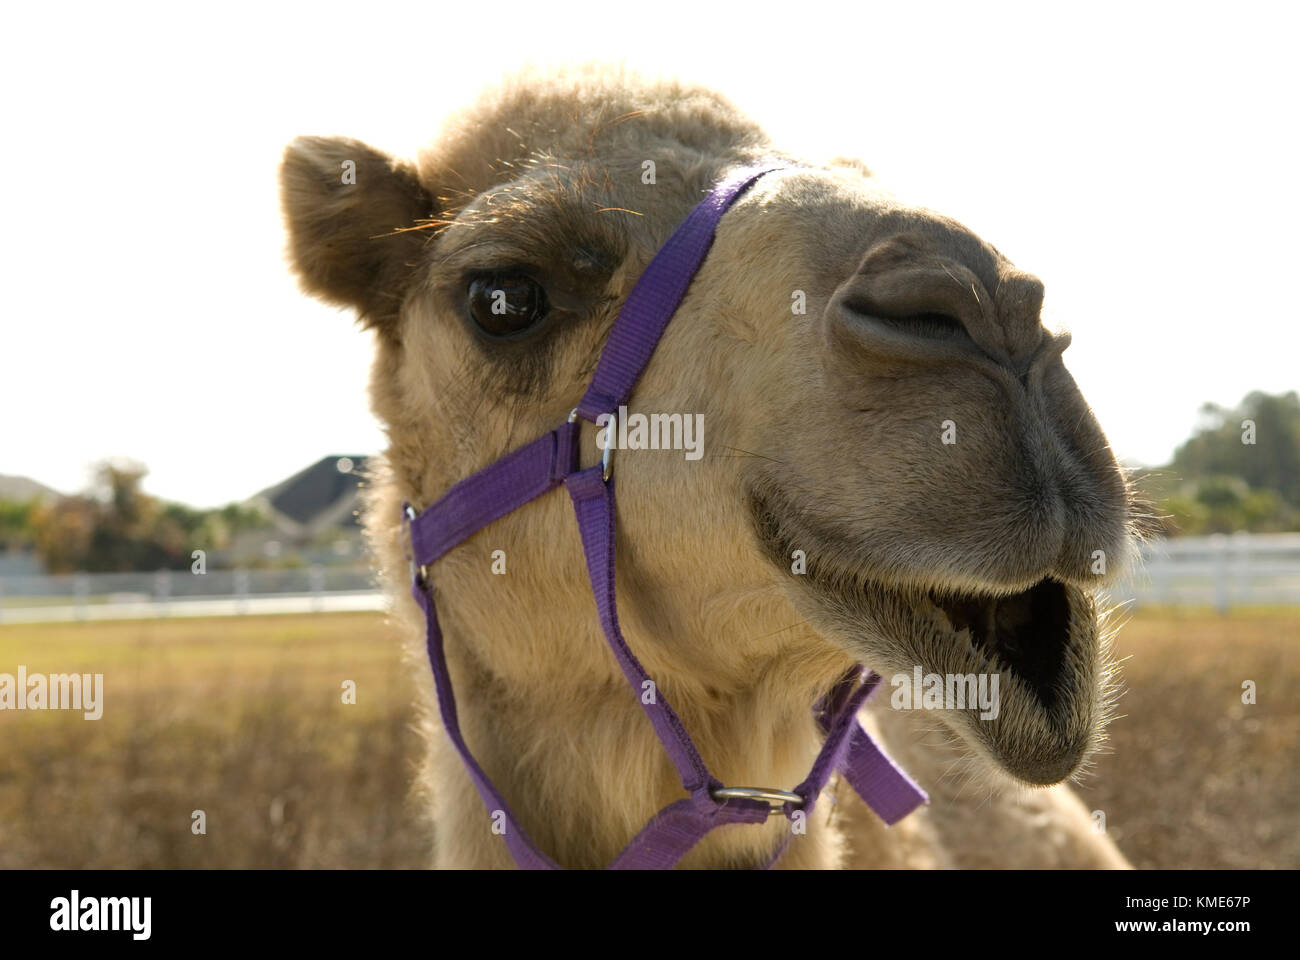 Smiling Camel, USA. Stock Photo